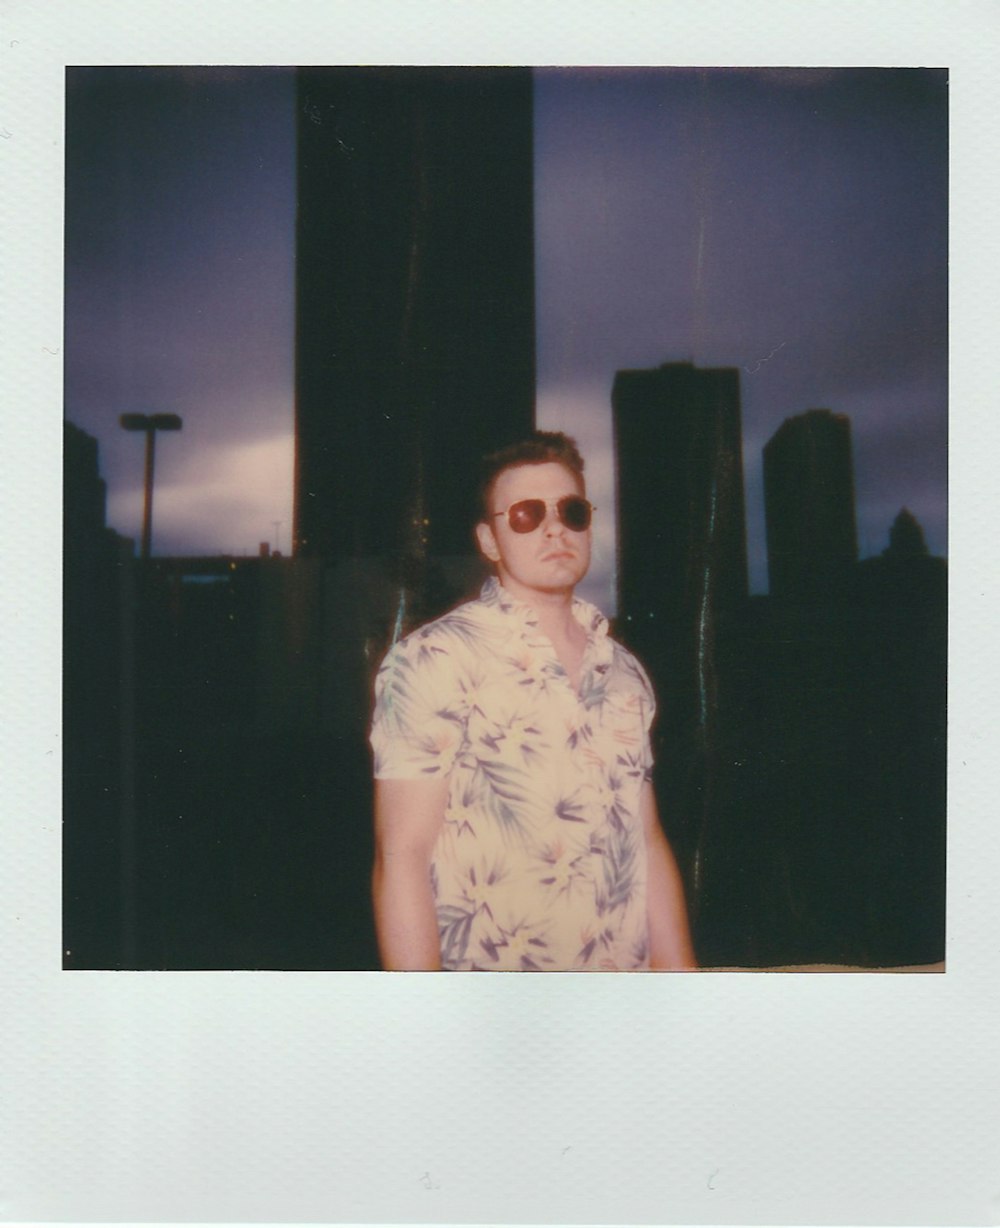 man wearing aviator sunglasses across city building